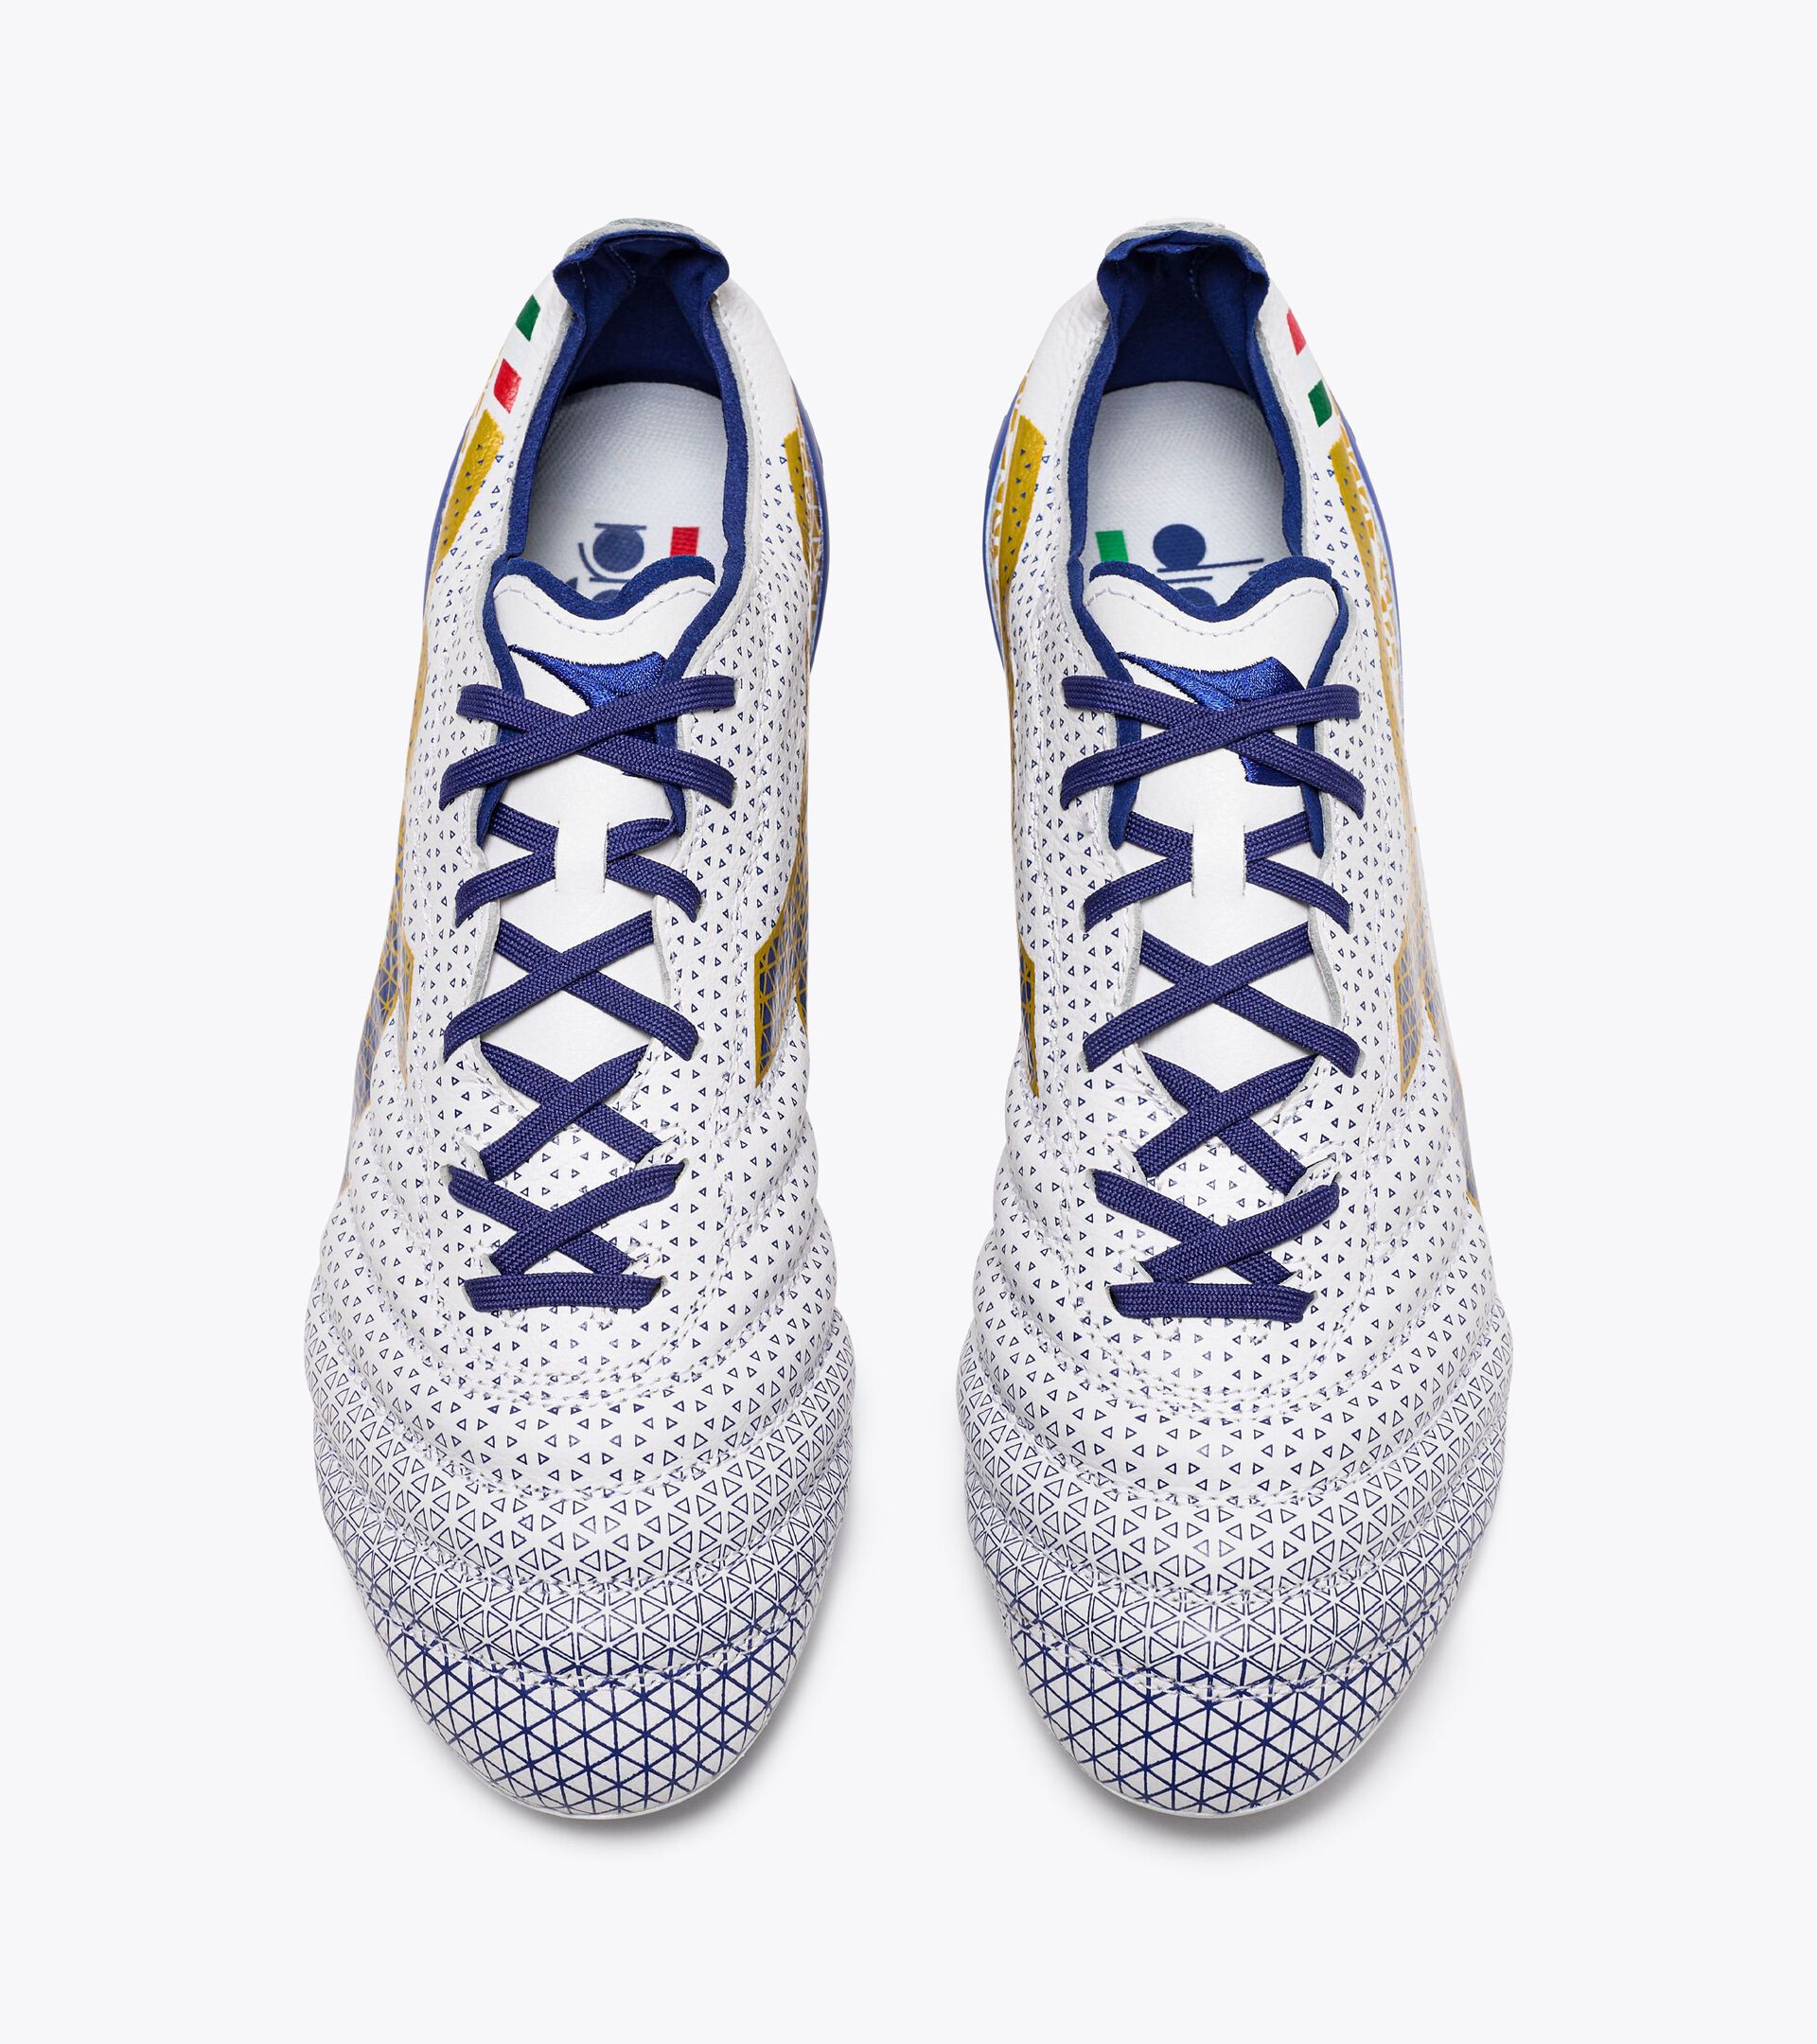 Calcio boots for firm grounds - Made in Italy - Gender Neutral BRASIL ELITE TECH GR ITA LPX WHITE/MAZARINE BLUE/GOLD - Diadora